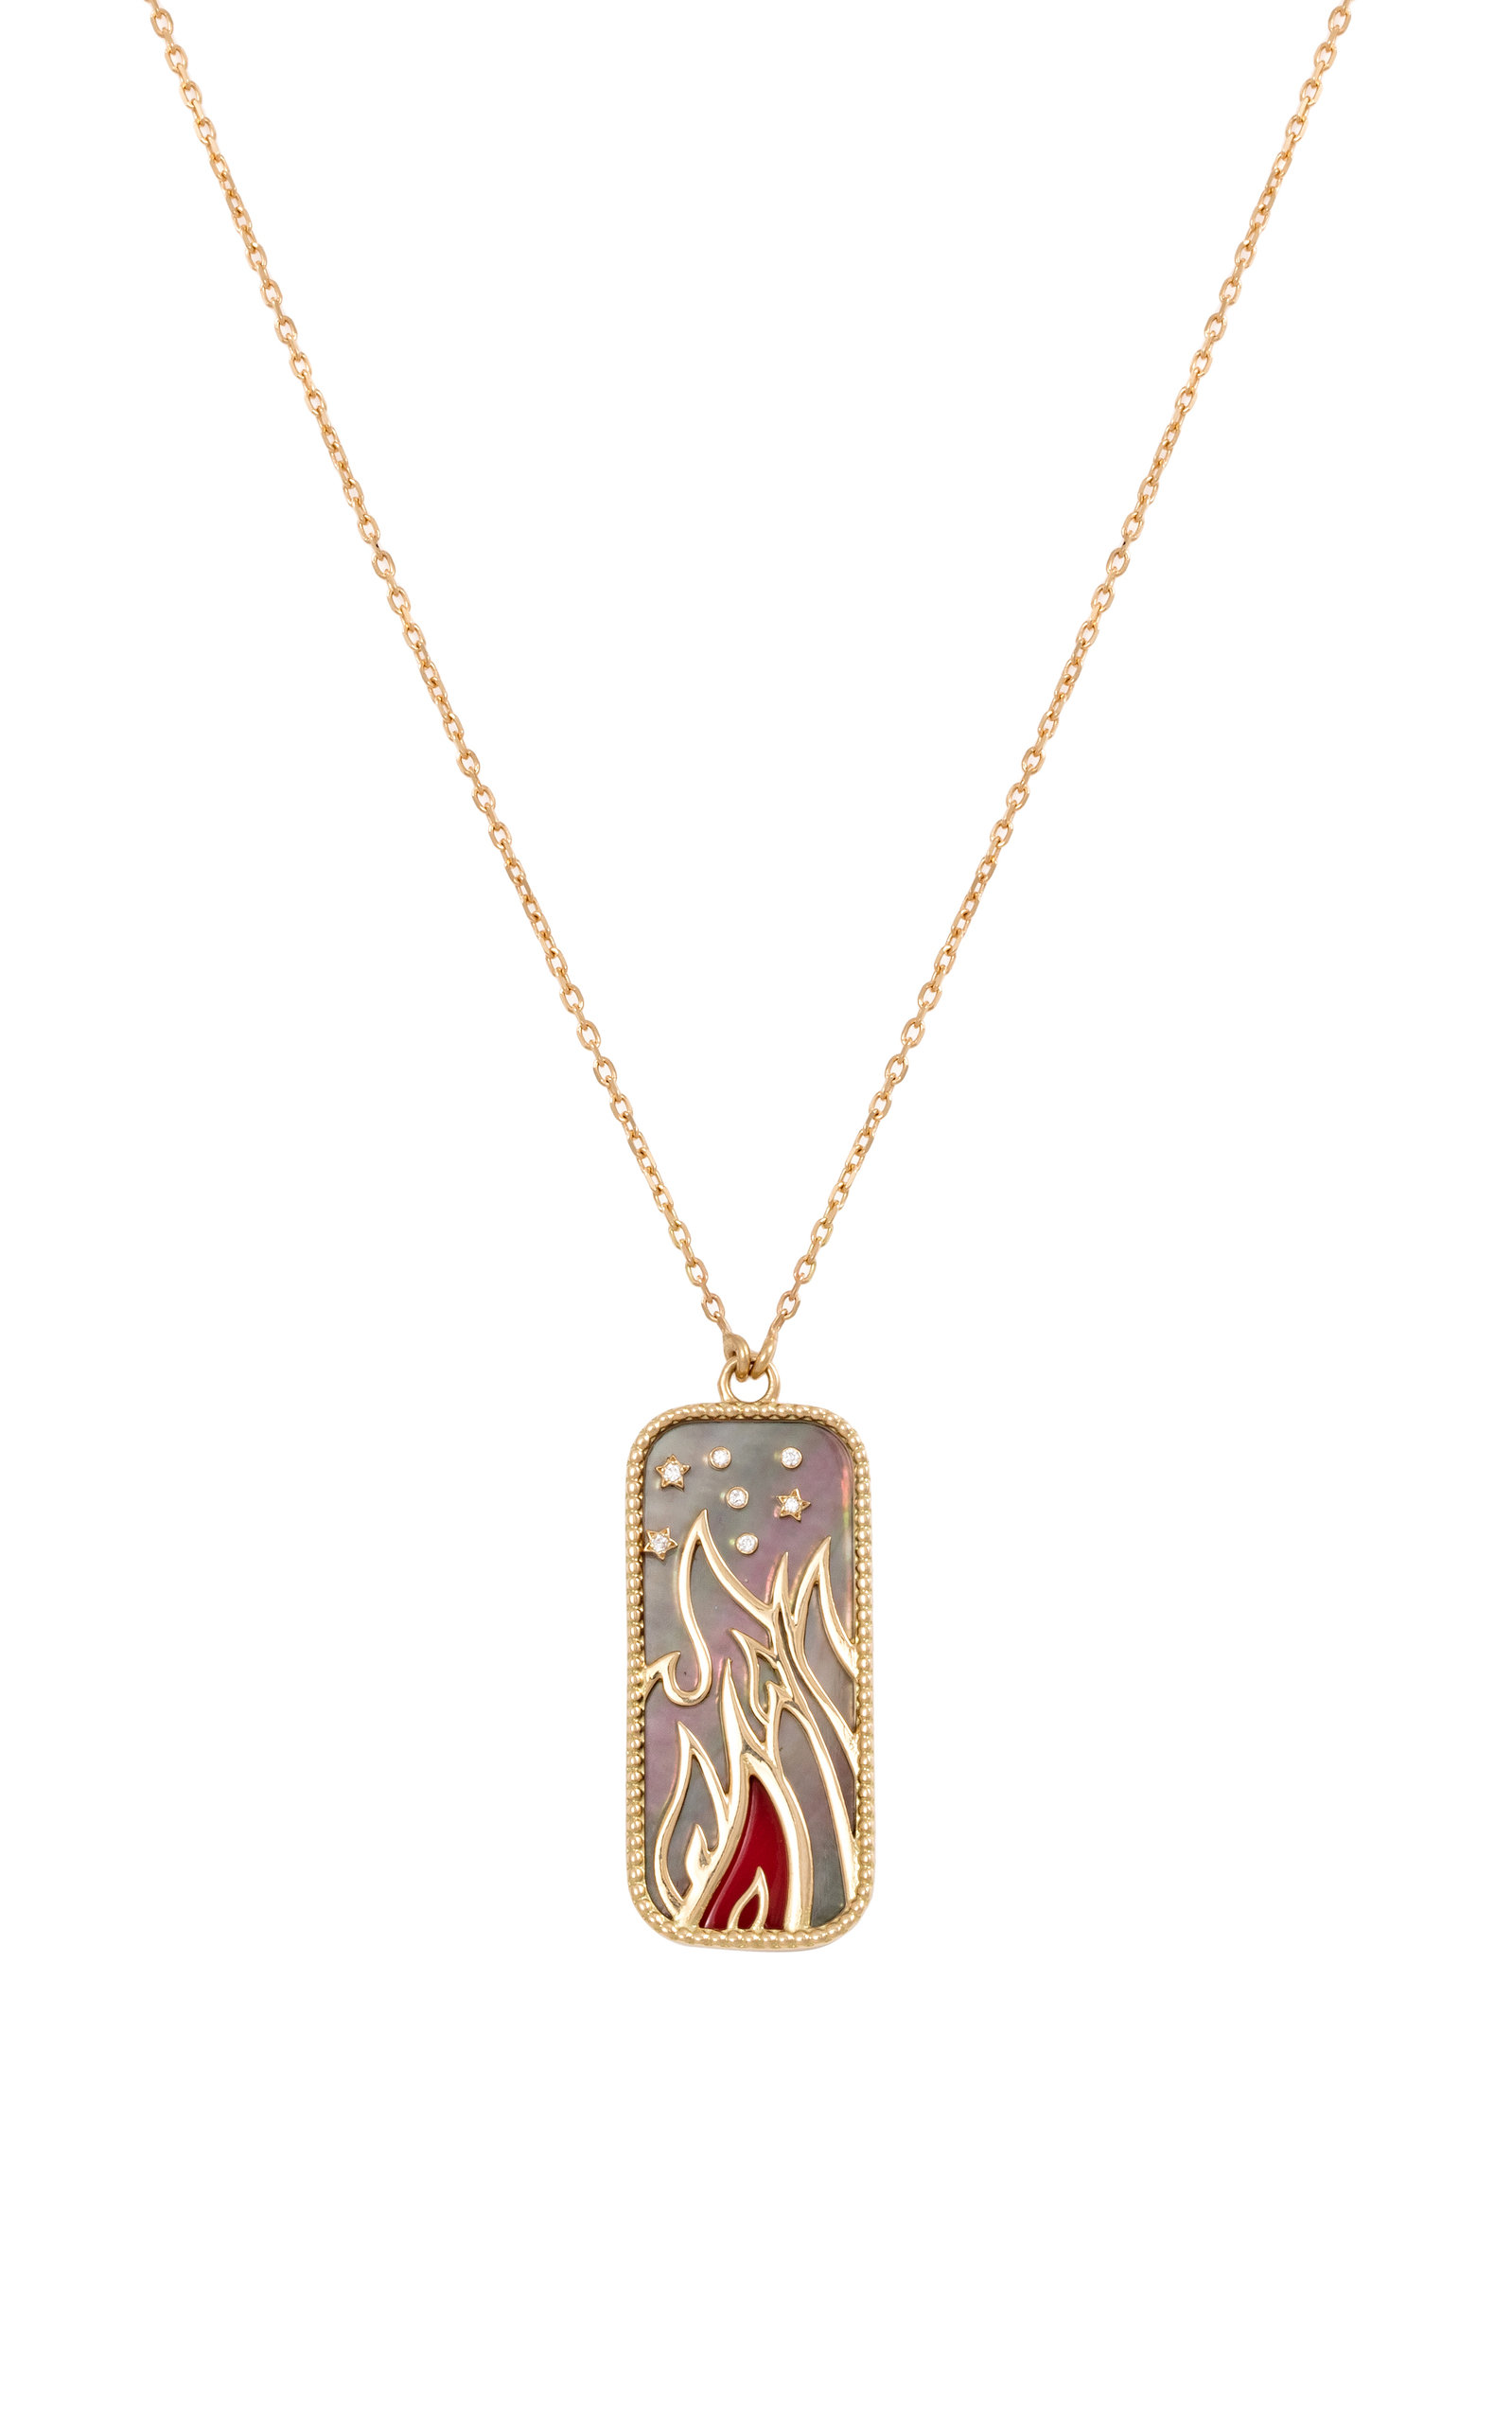 L'Atelier Nawbar Women's Elements of Love 18K Yellow Gold Fire Pendant Necklace